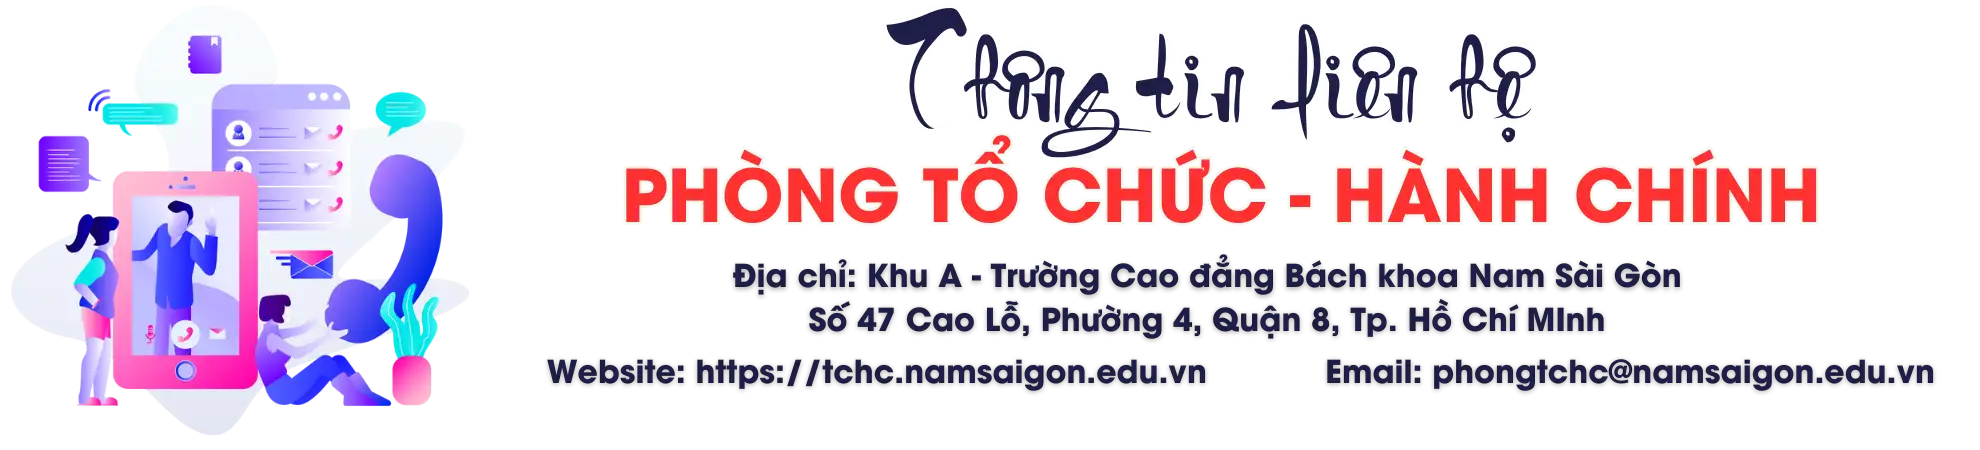 Thong Tin Lien He Phong To Chuc Hanh Chinh